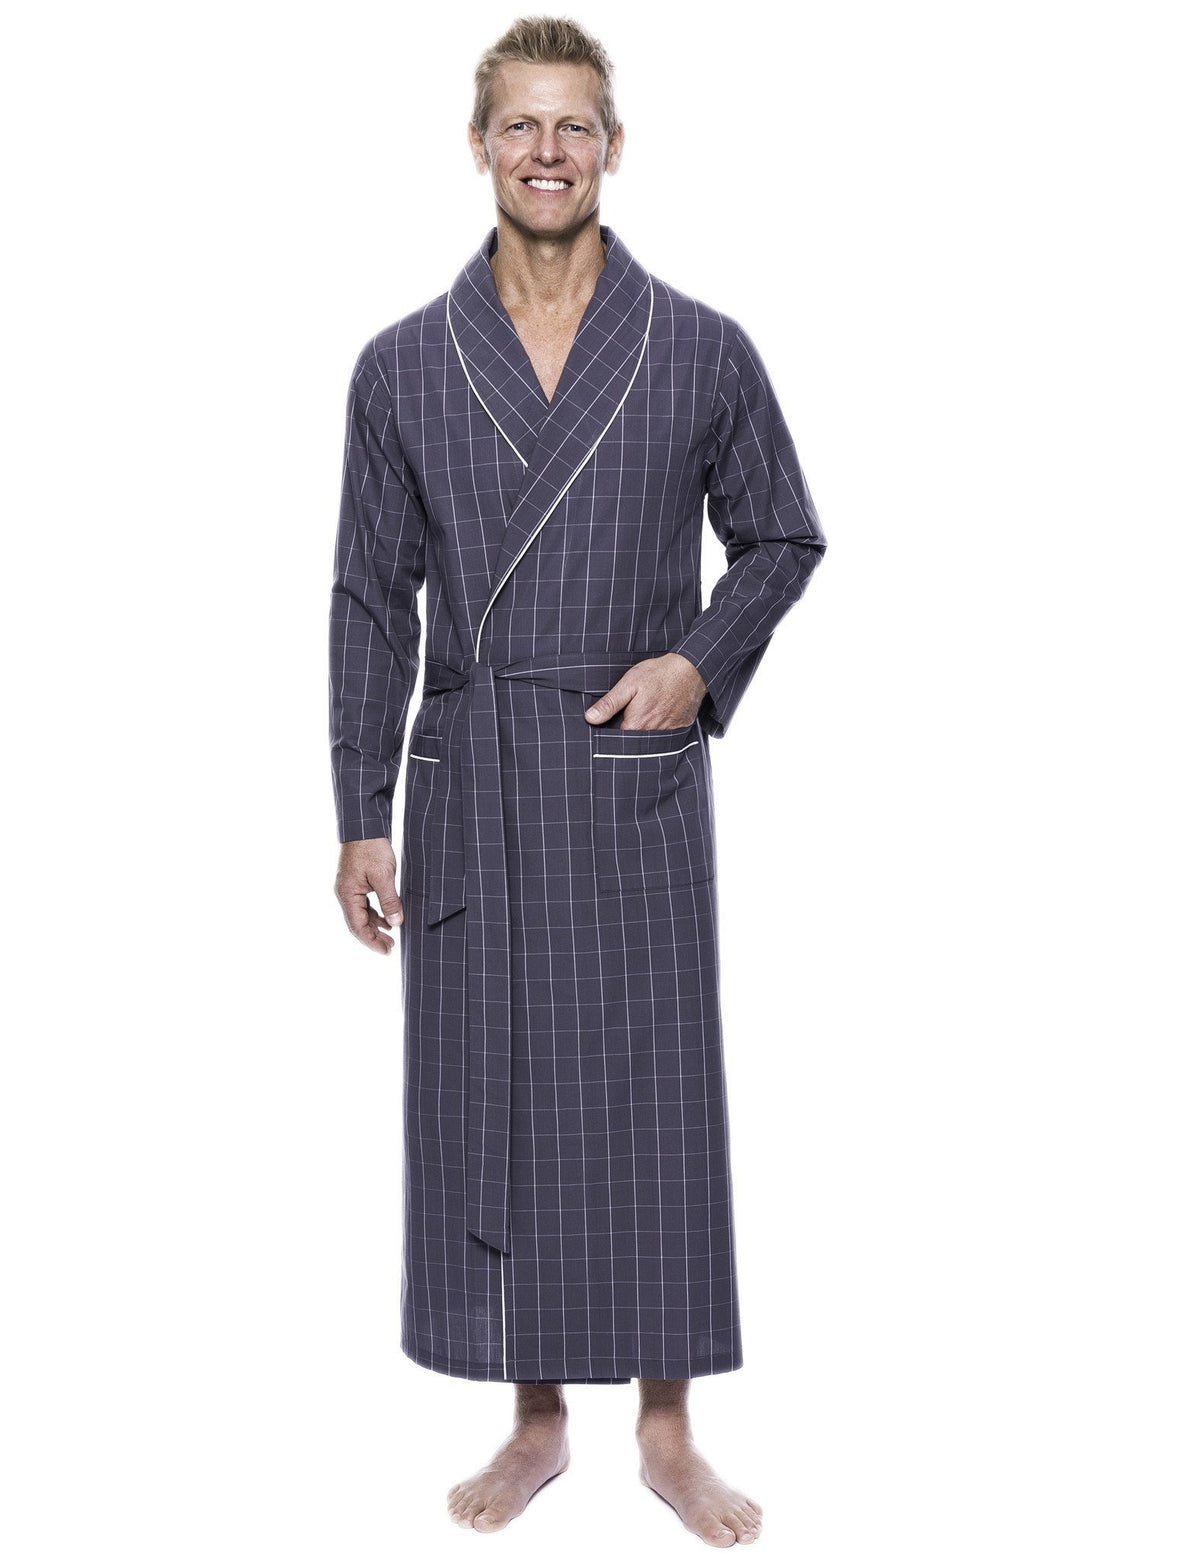 Men's 100% Woven Cotton Robe - Windowpane Checks Grey